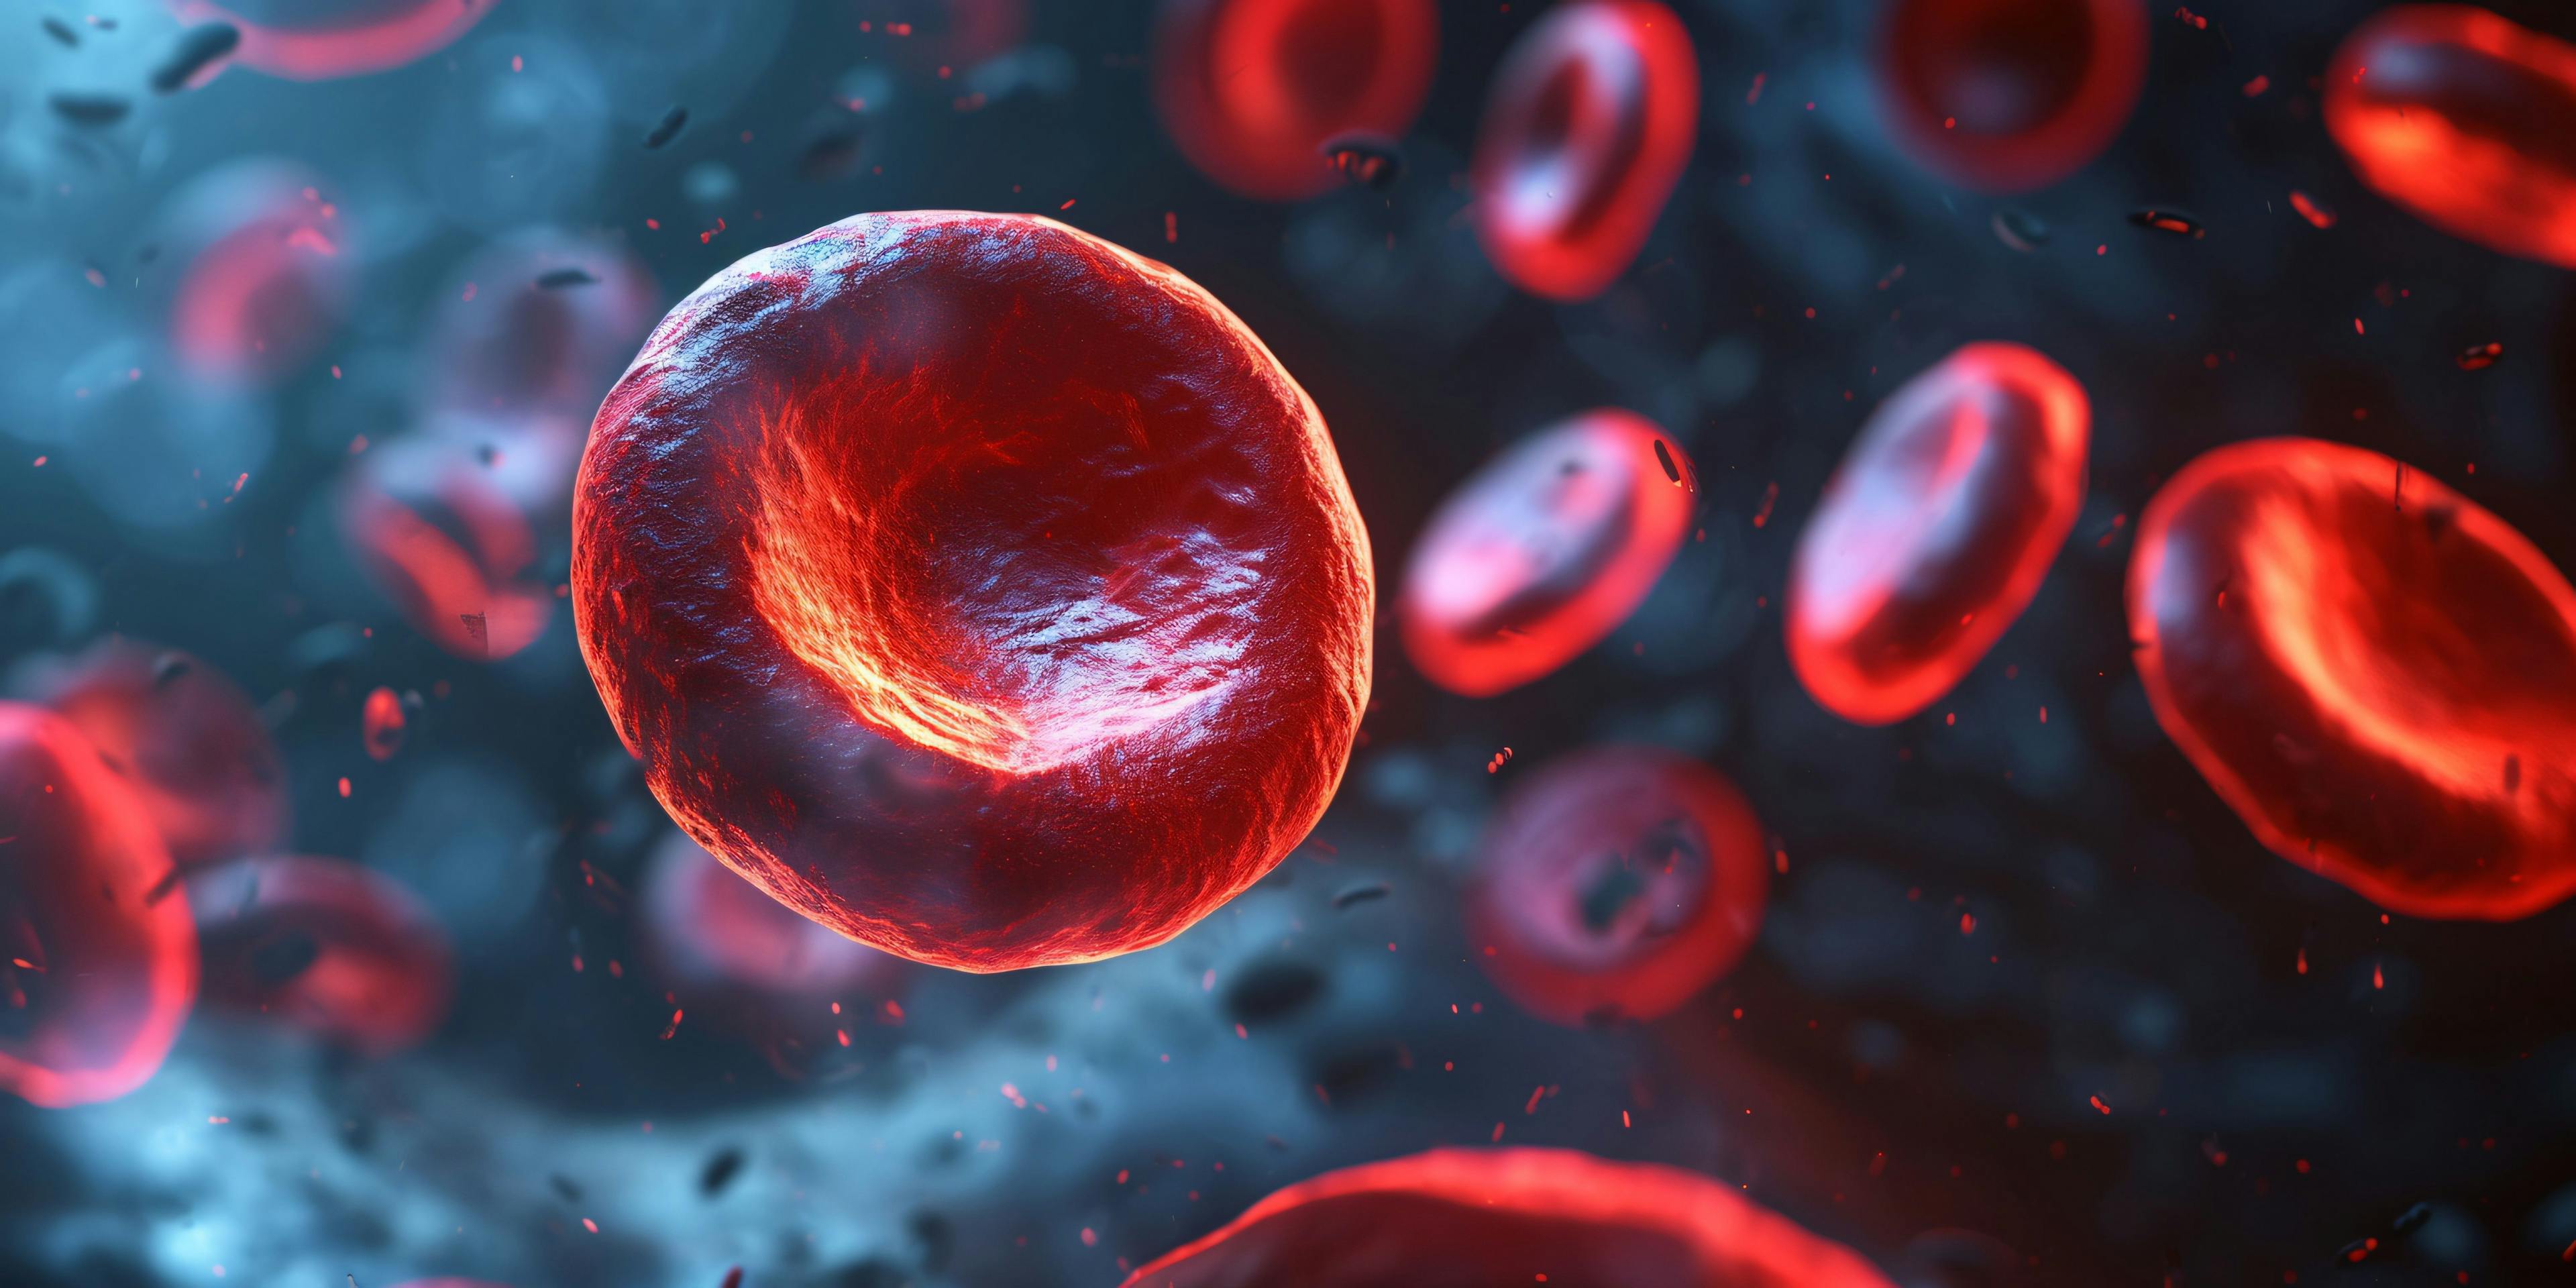 Red Blood Cell Model | image credit: Bipul Kumar - stock.adobe.com